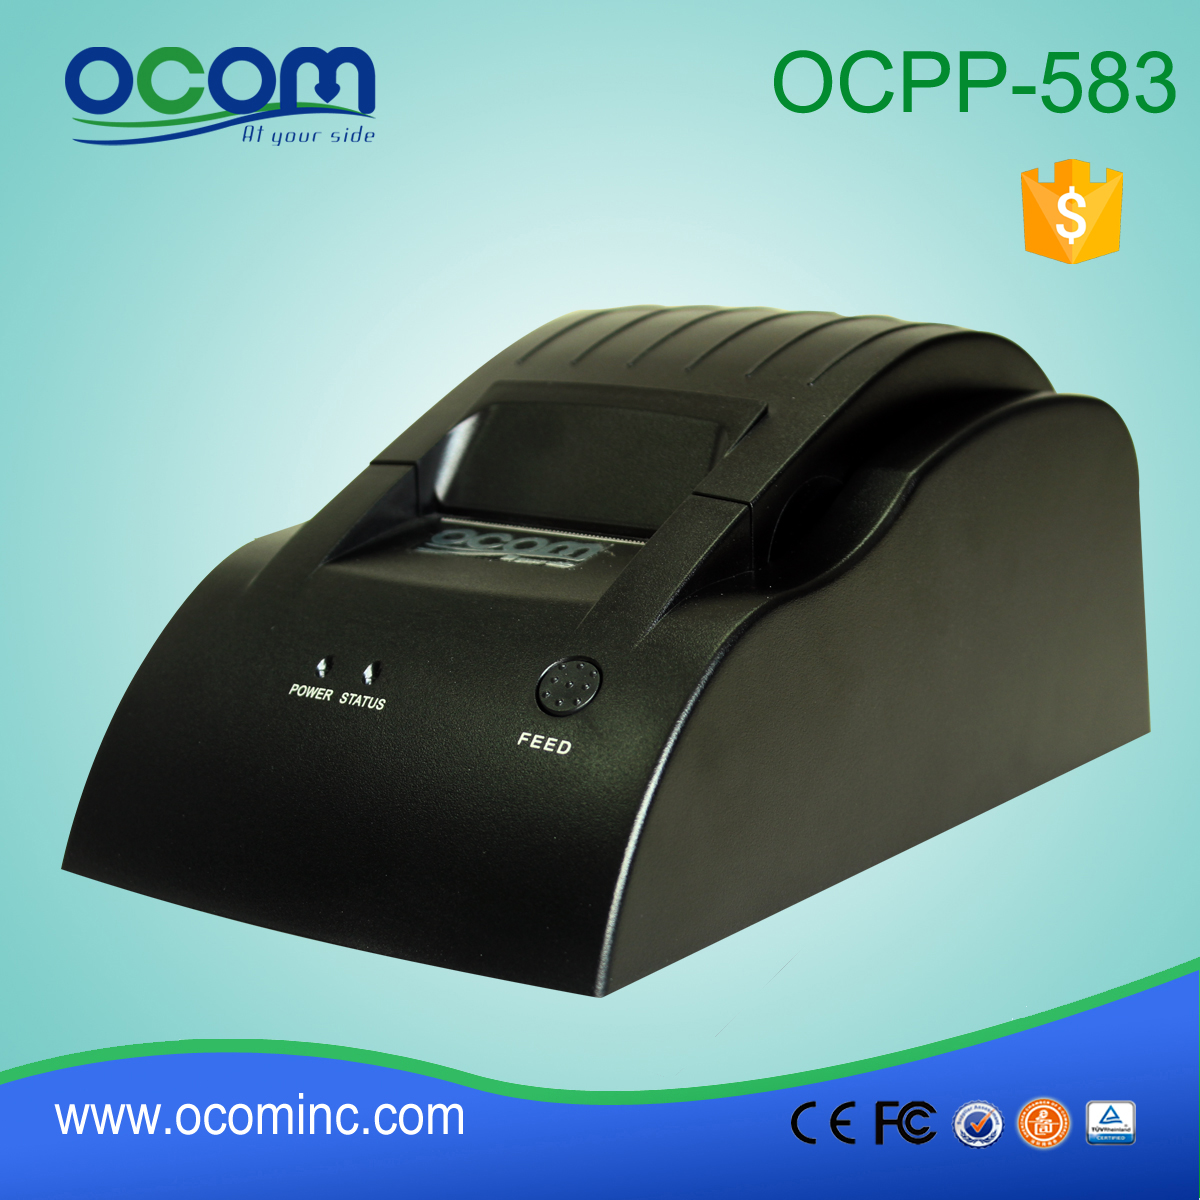 OCPP-583-R 58mm POS Thermo Ticket Beleg Drucker RS232 Port